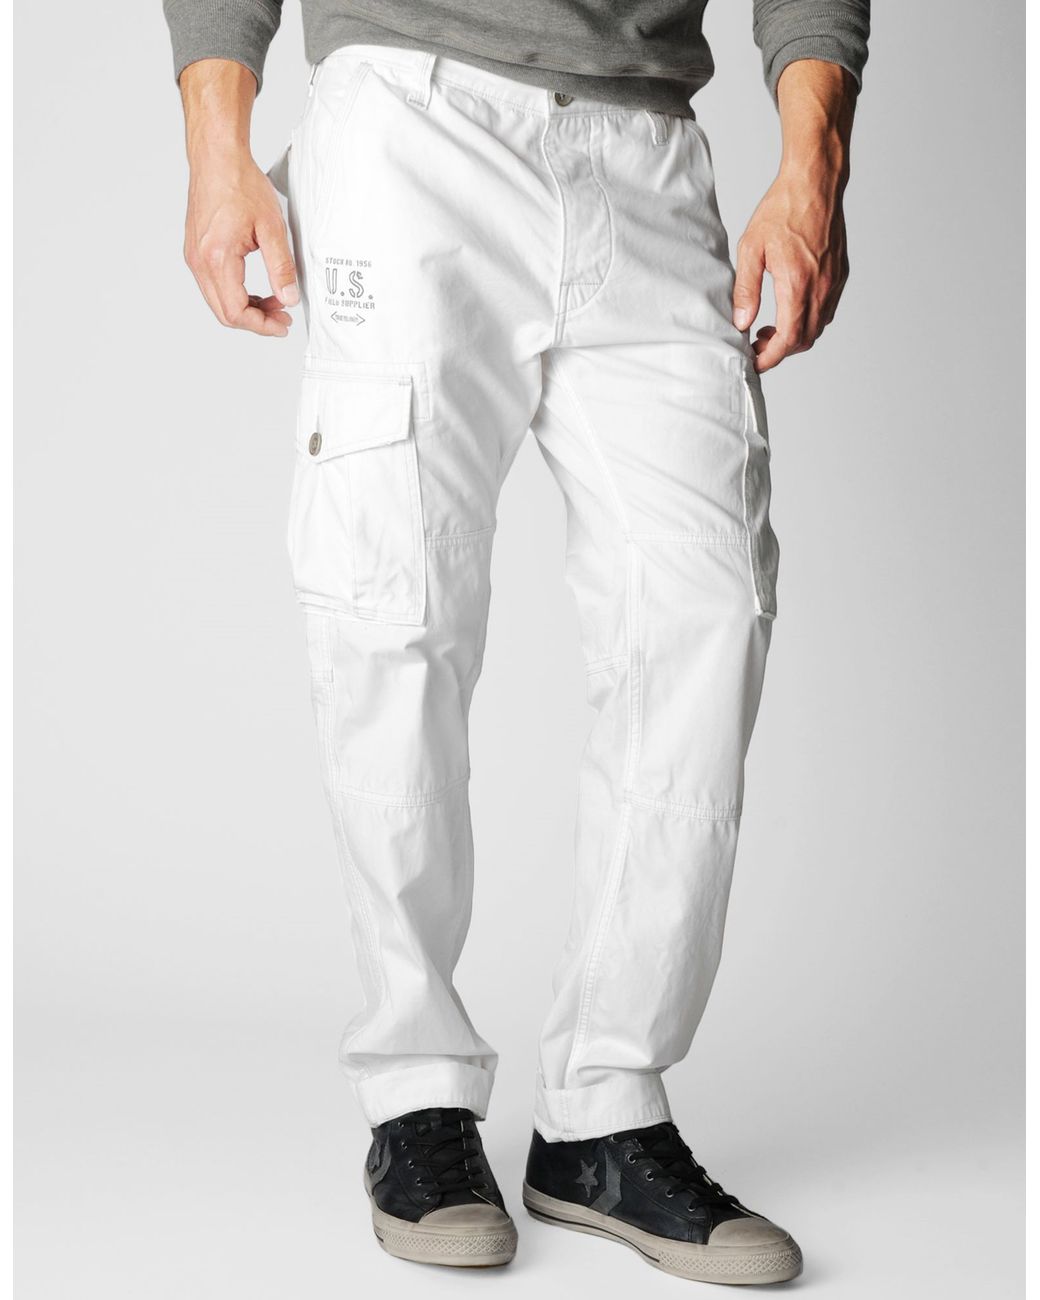 Nylon cargo trousers - Natural white - Men | H&M IN